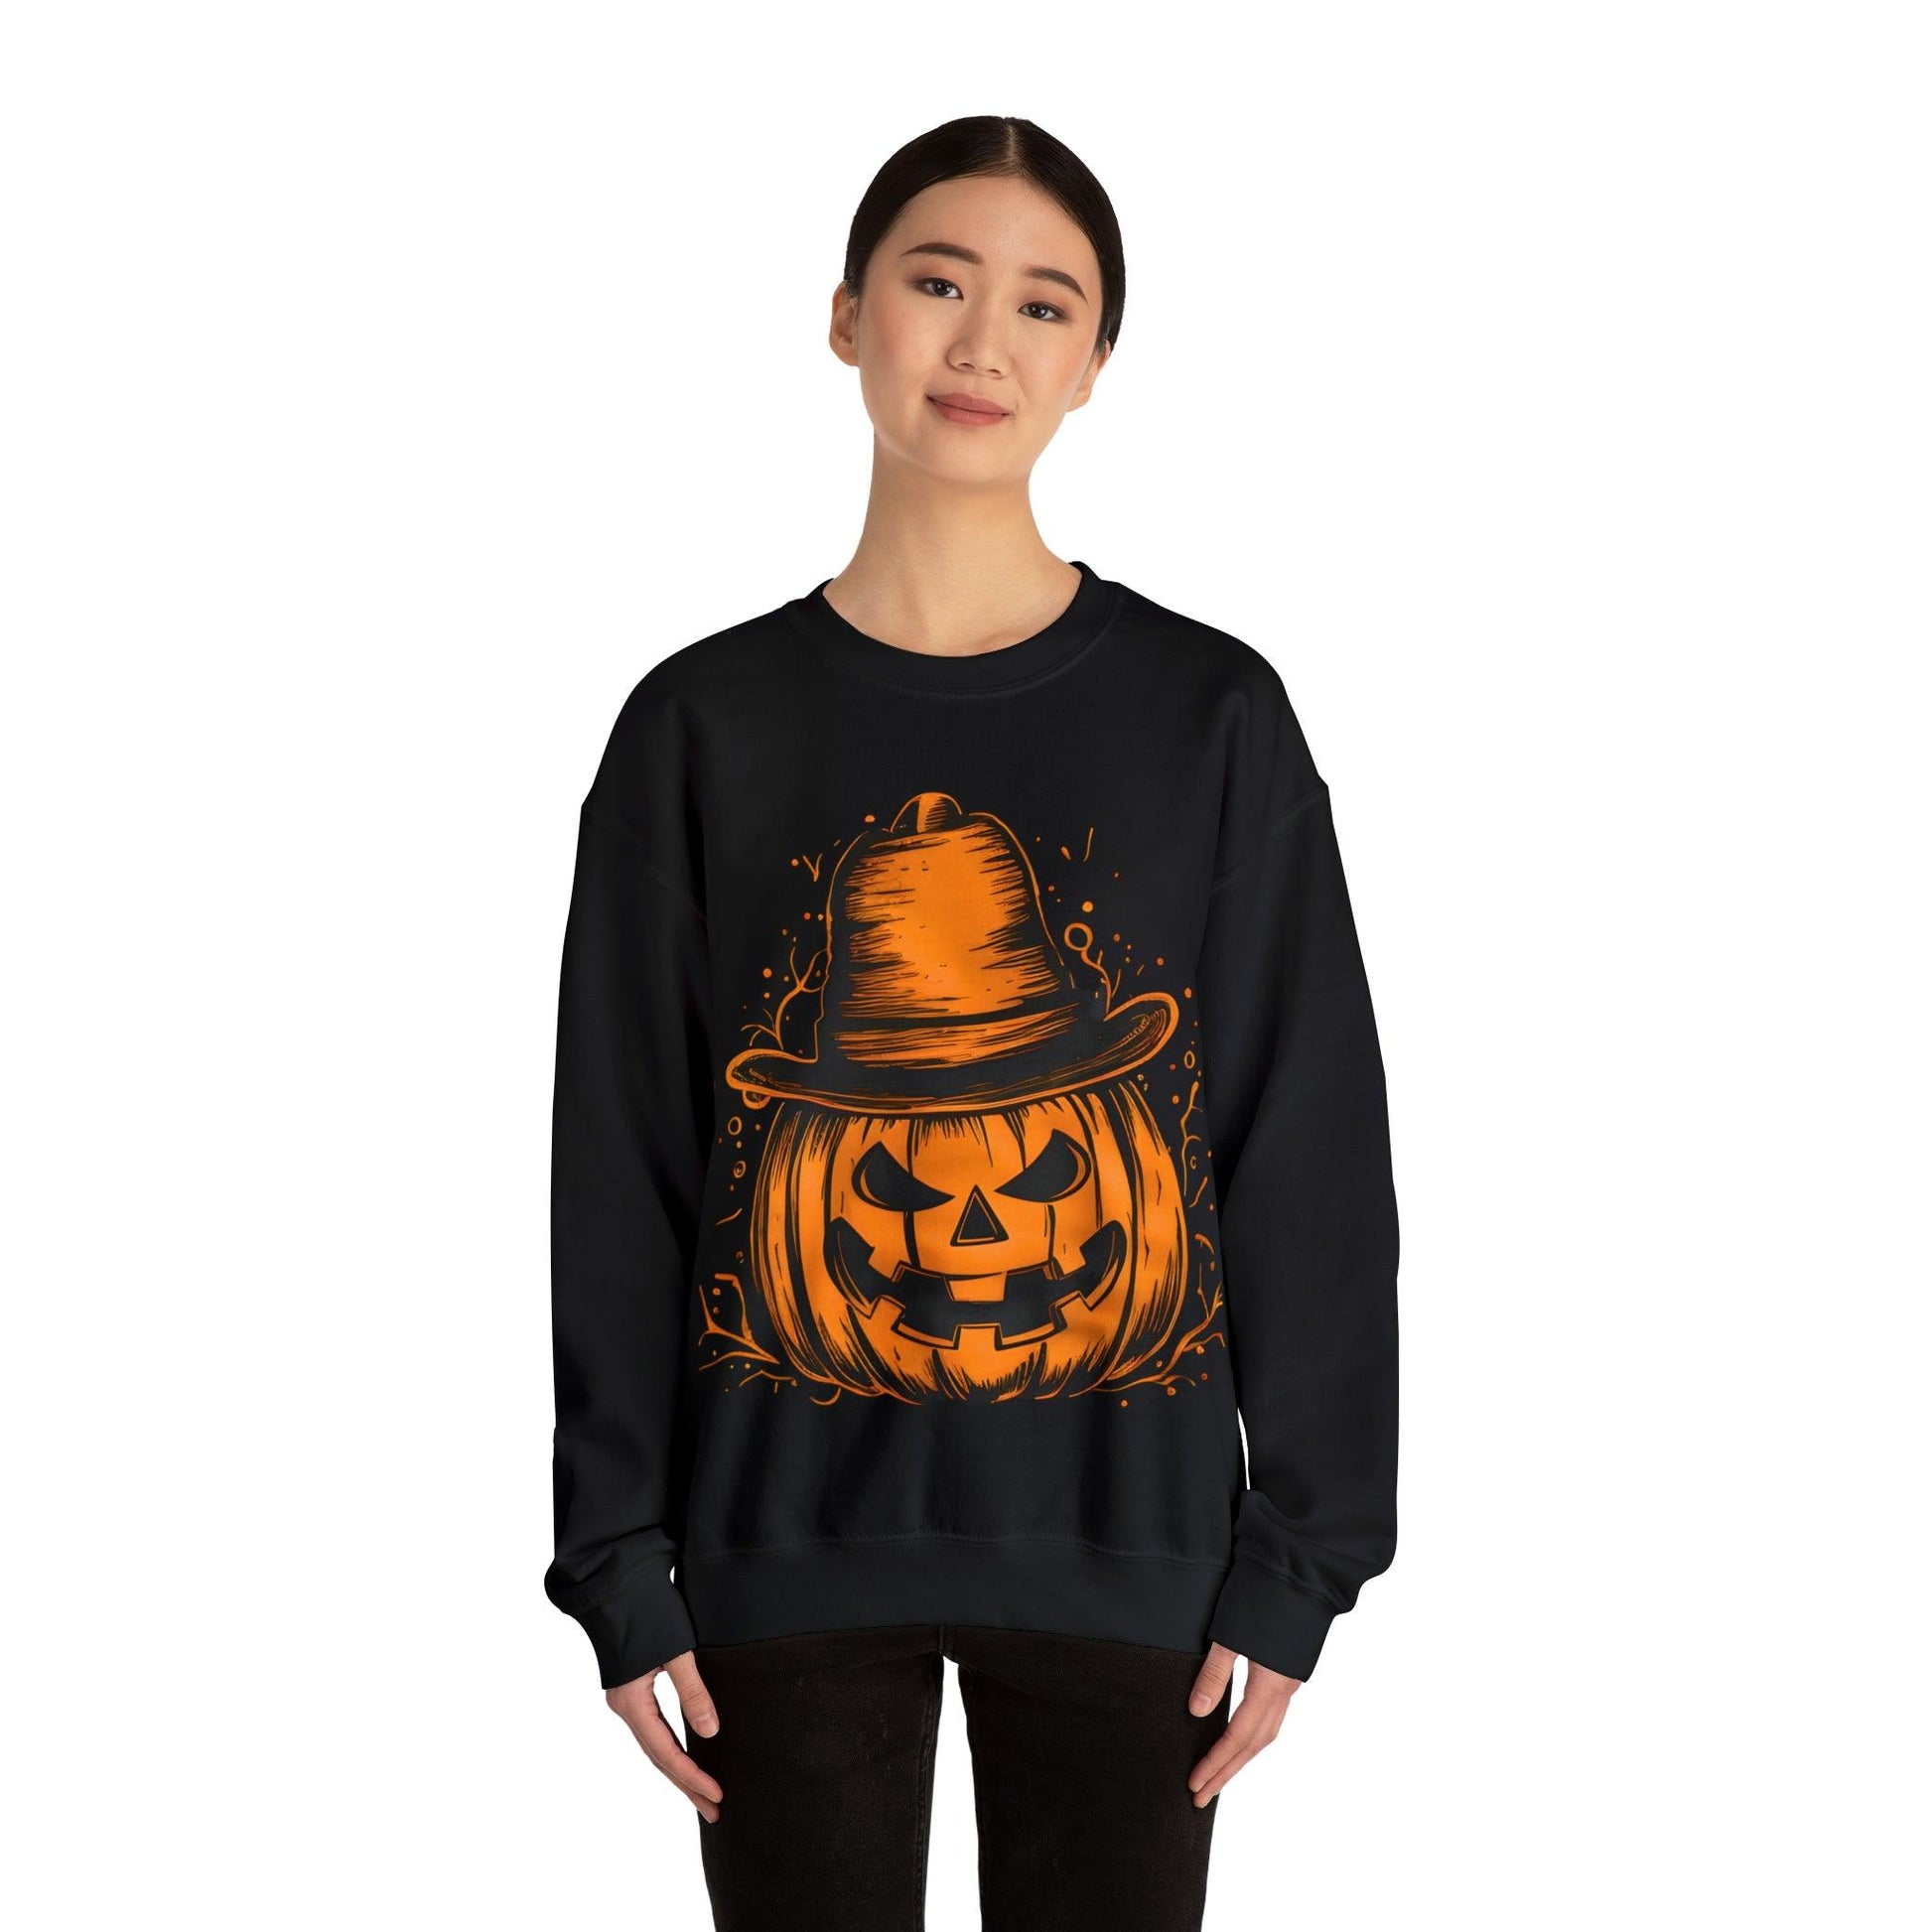 Scary Jack O Lantern Retro Halloween Sweatshirt: A Spooky Classic - Giftsmojo